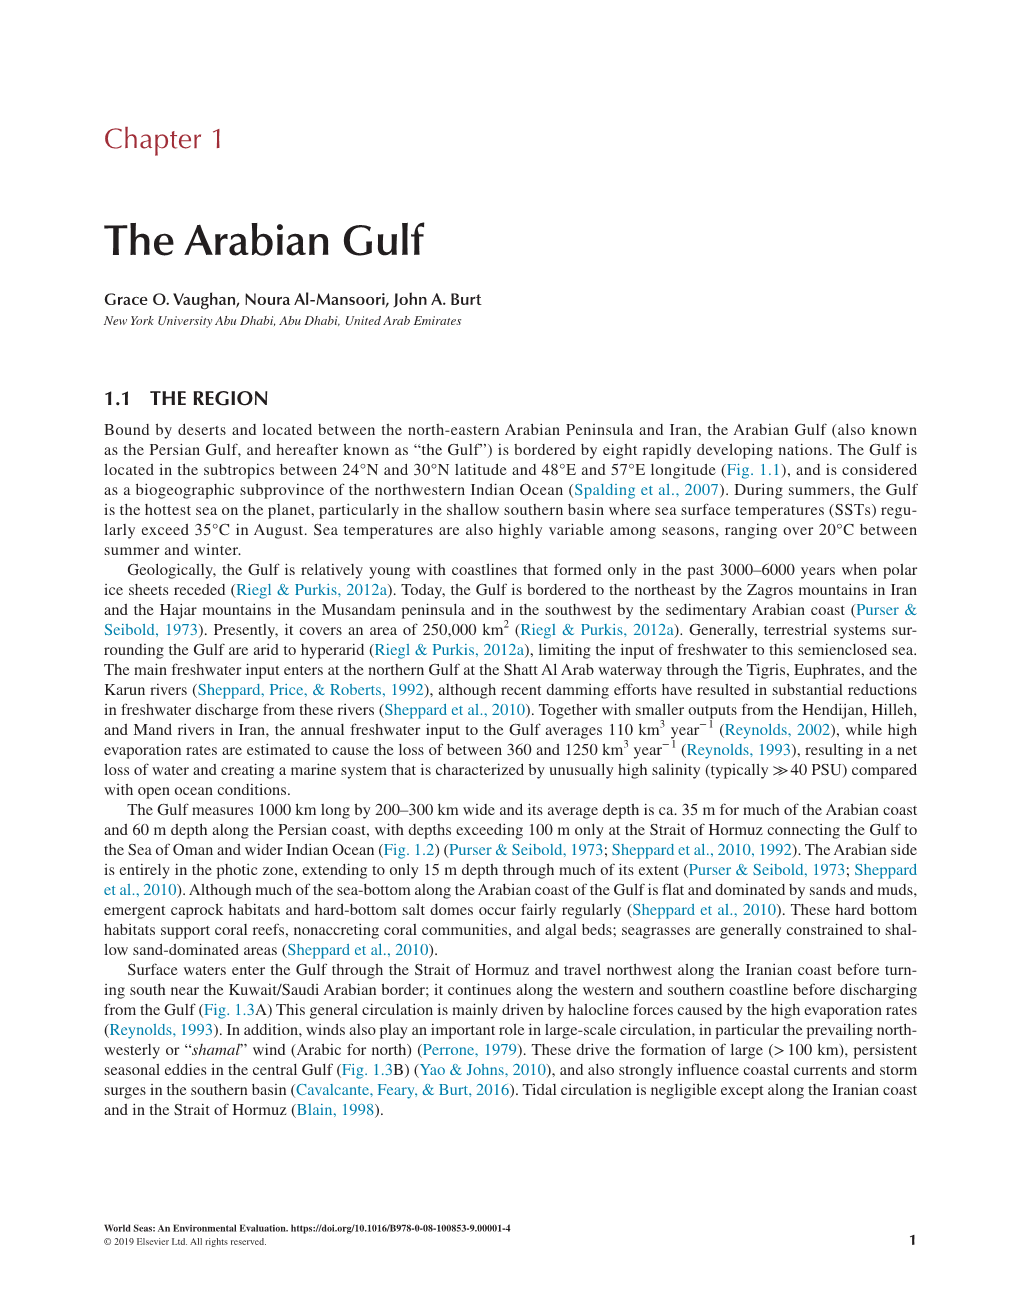 The Arabian Gulf